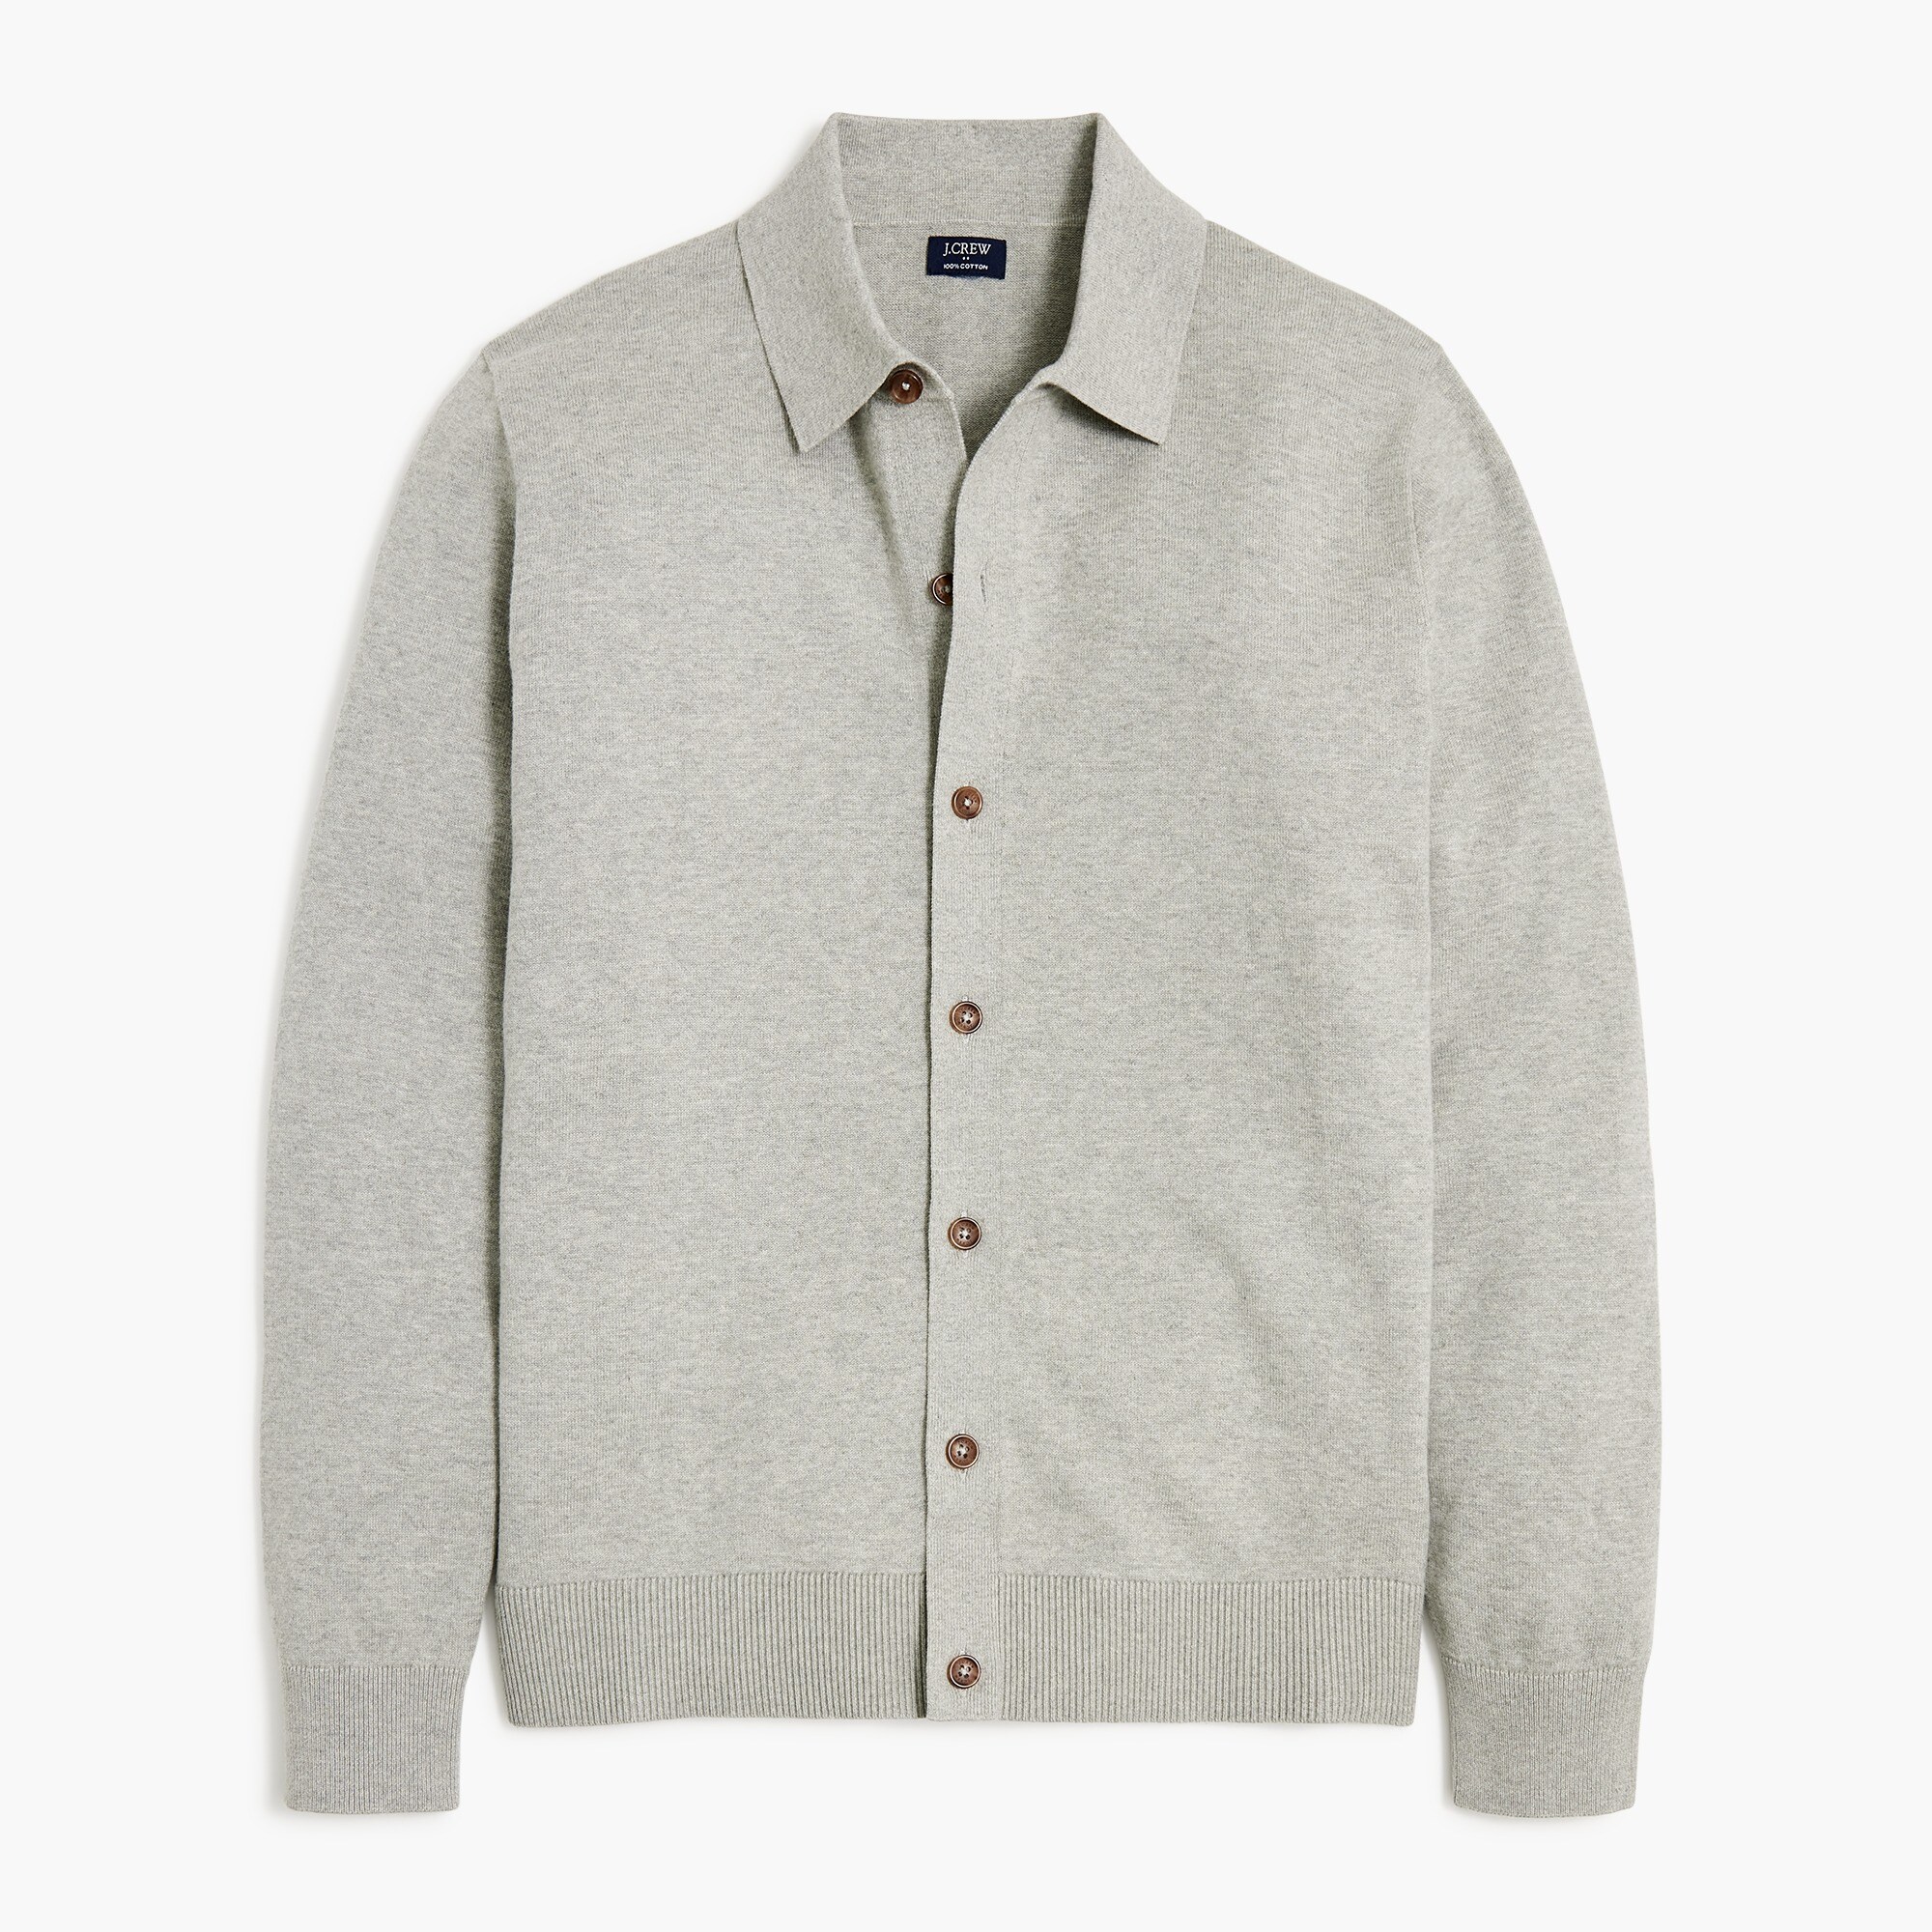  Cotton cardigan sweater-polo